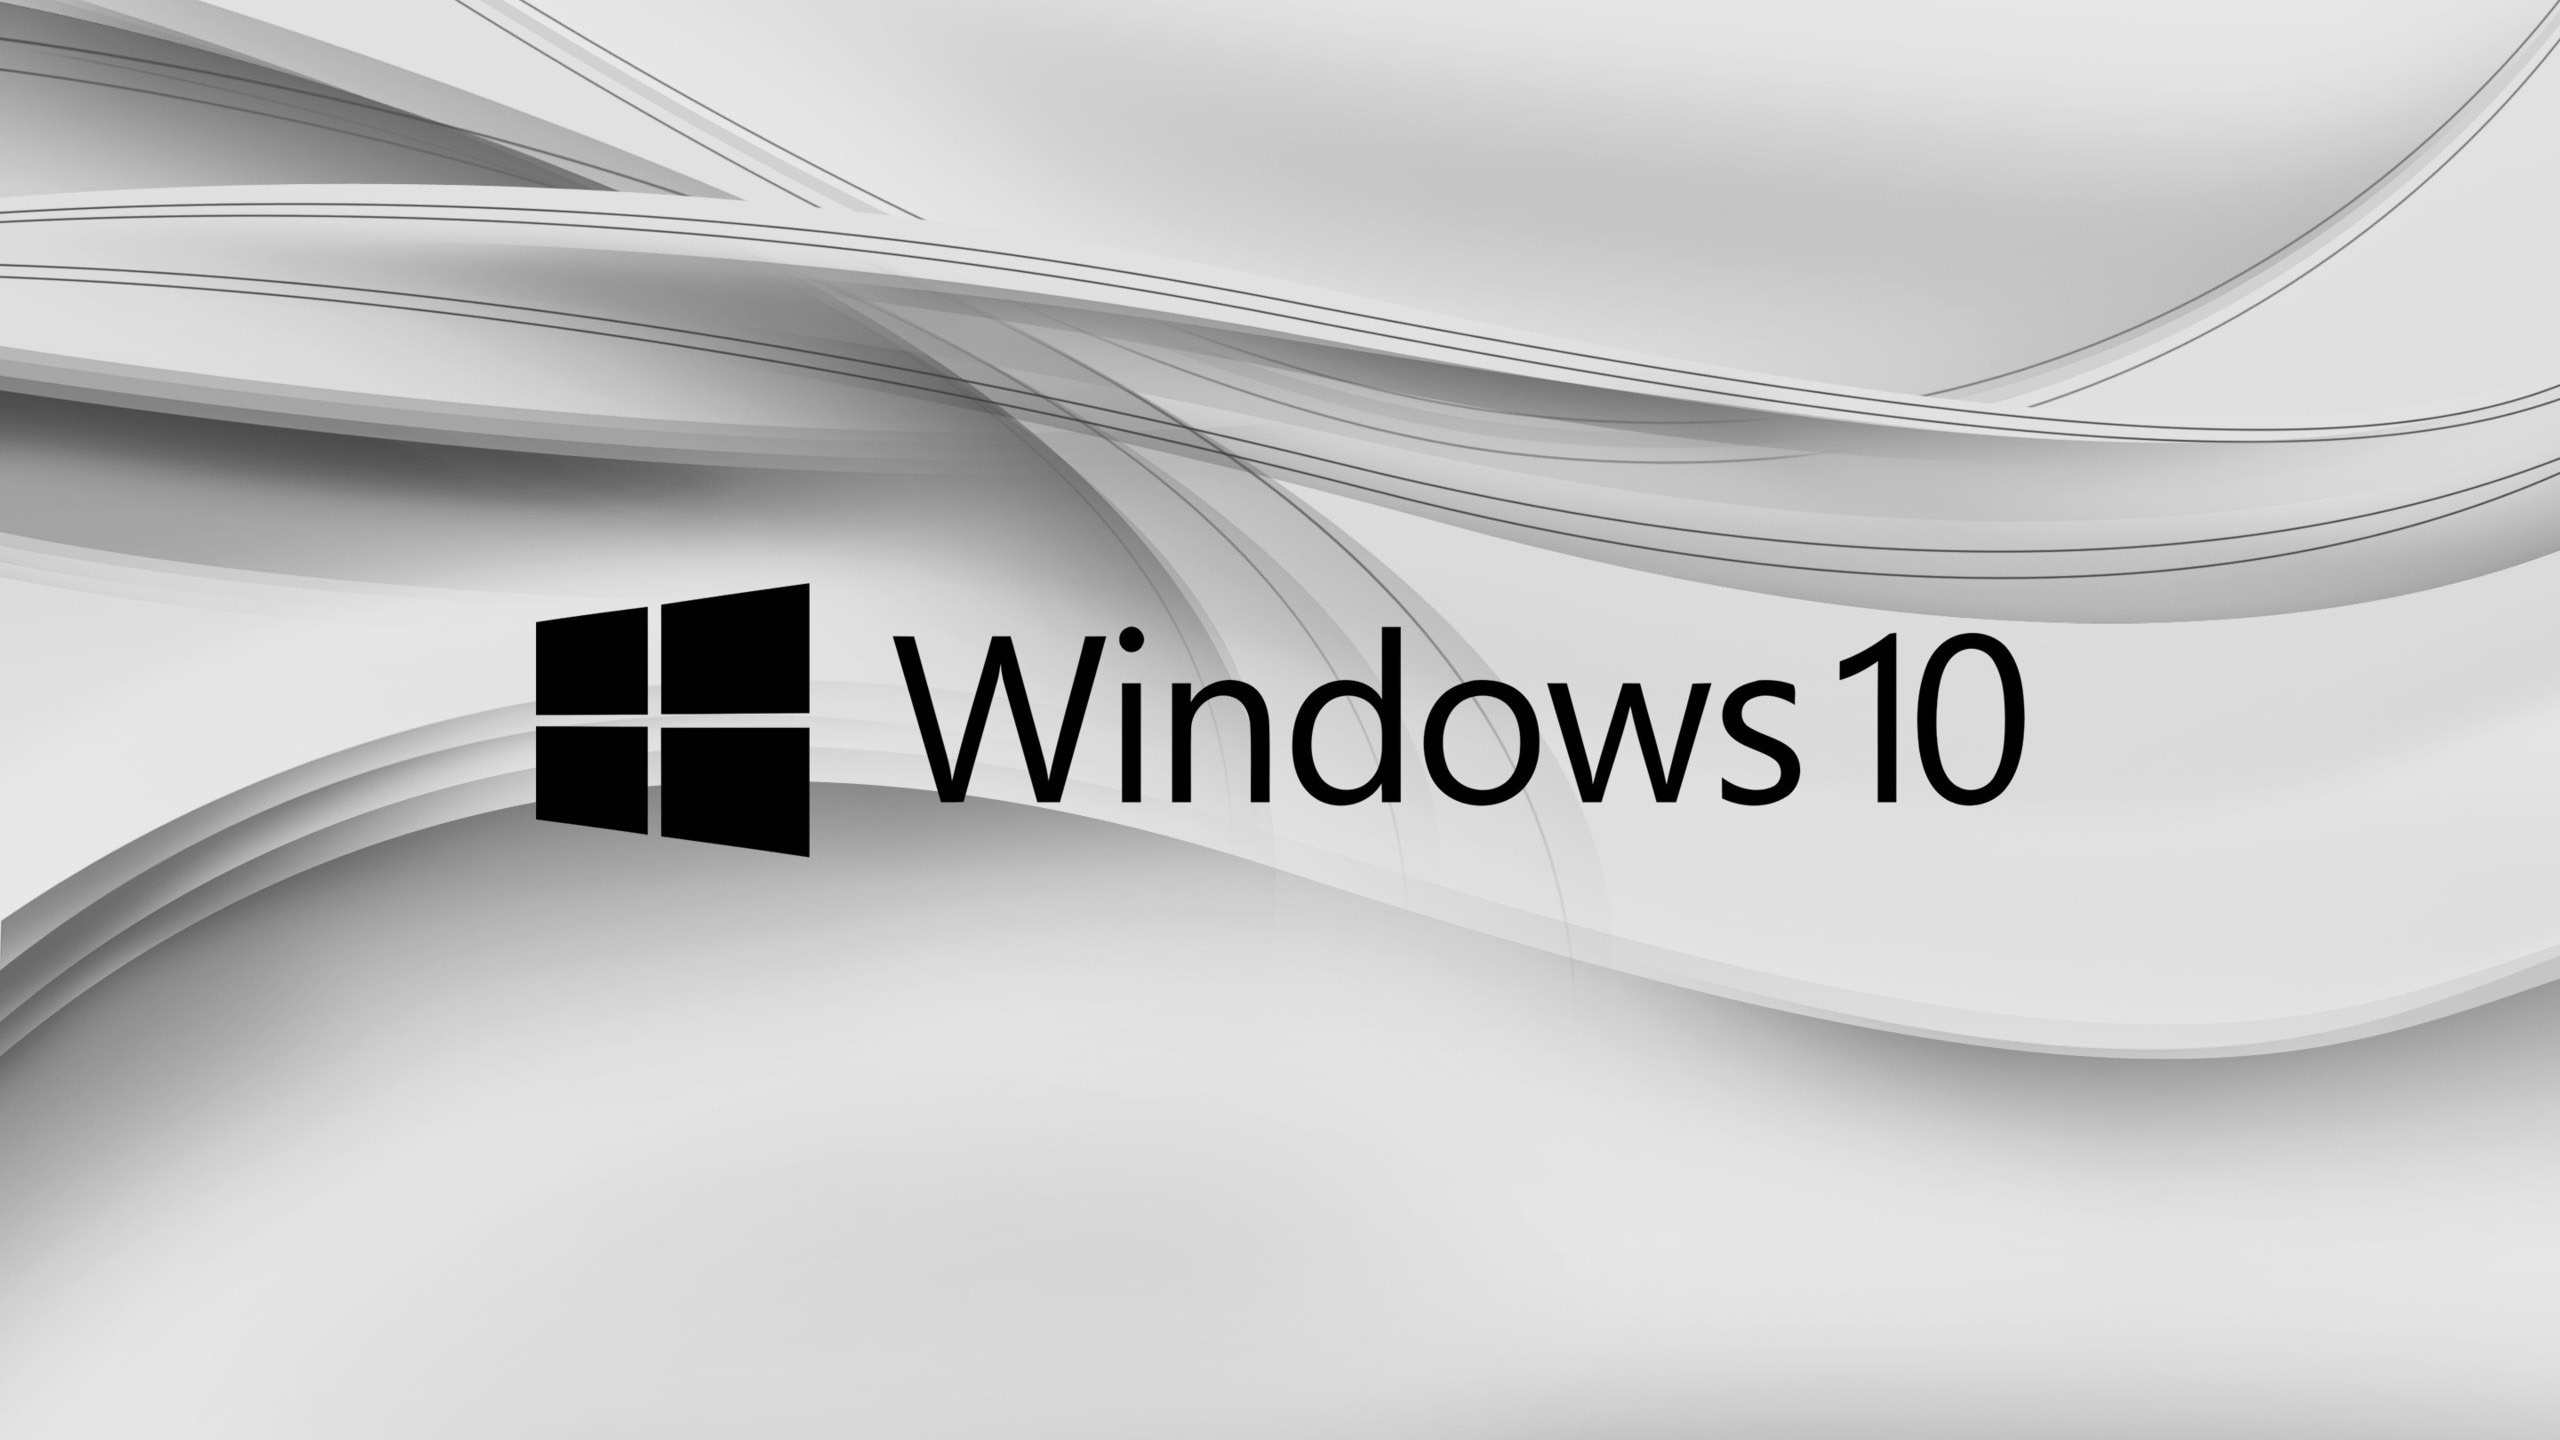 windows 10, gray, logo, 